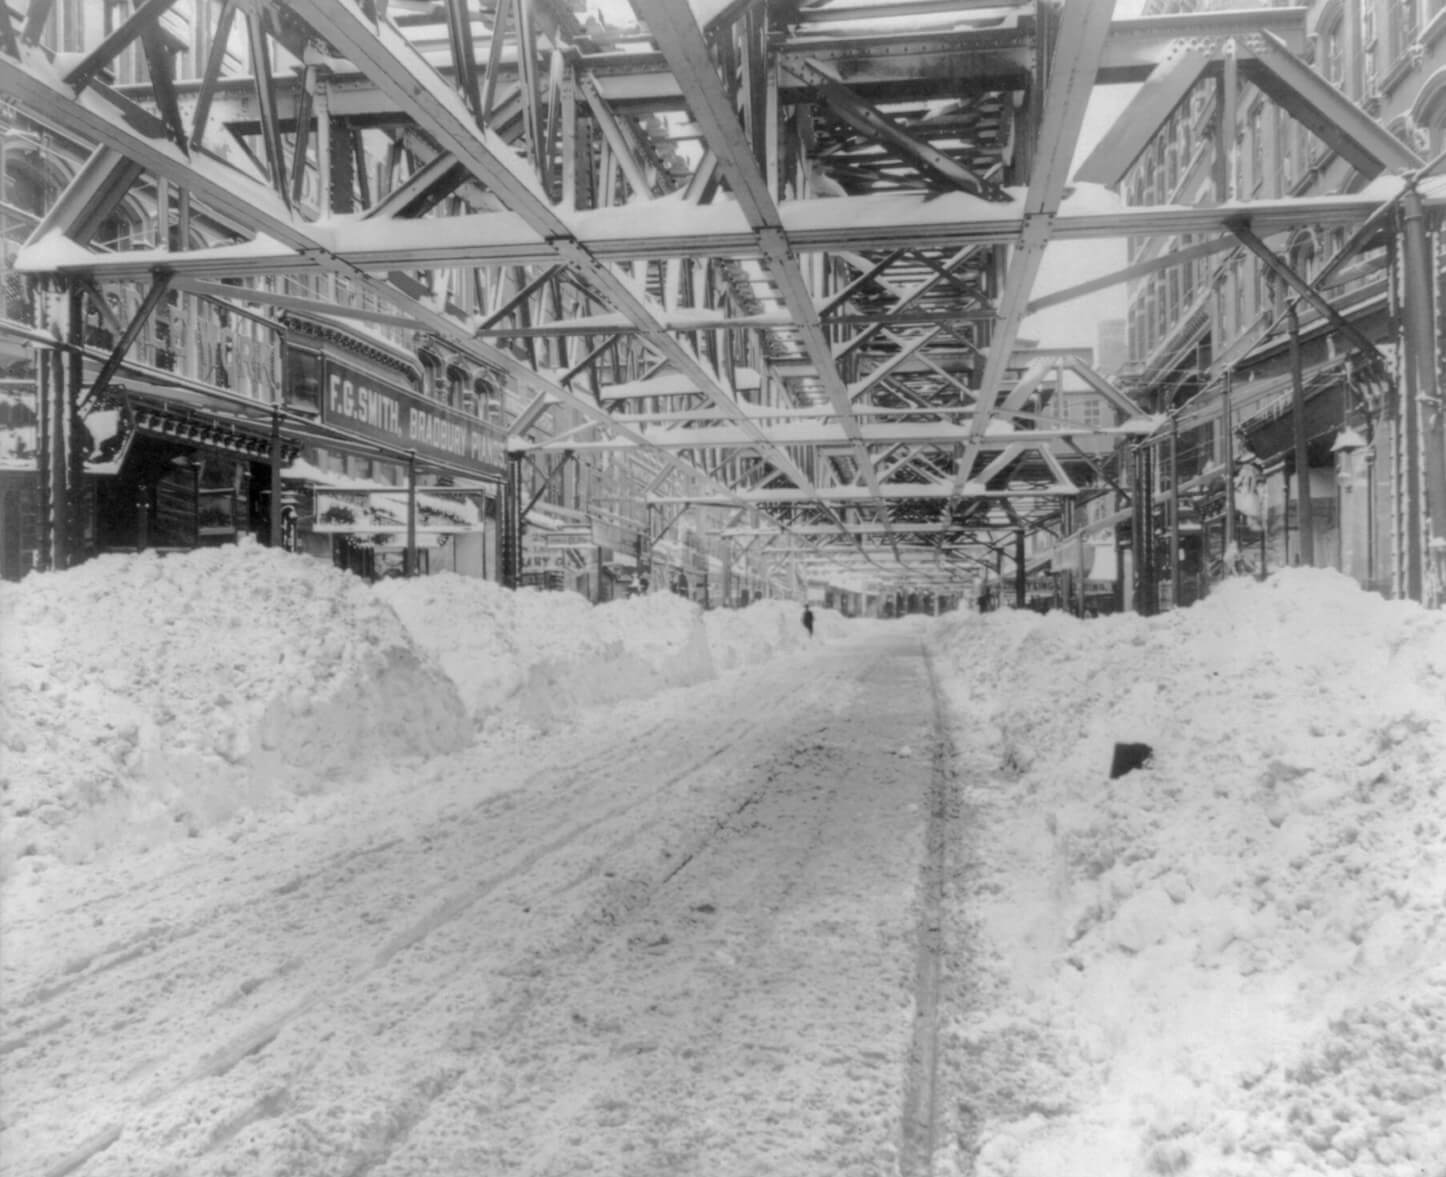 blizzard of 1888 brooklyn history snow